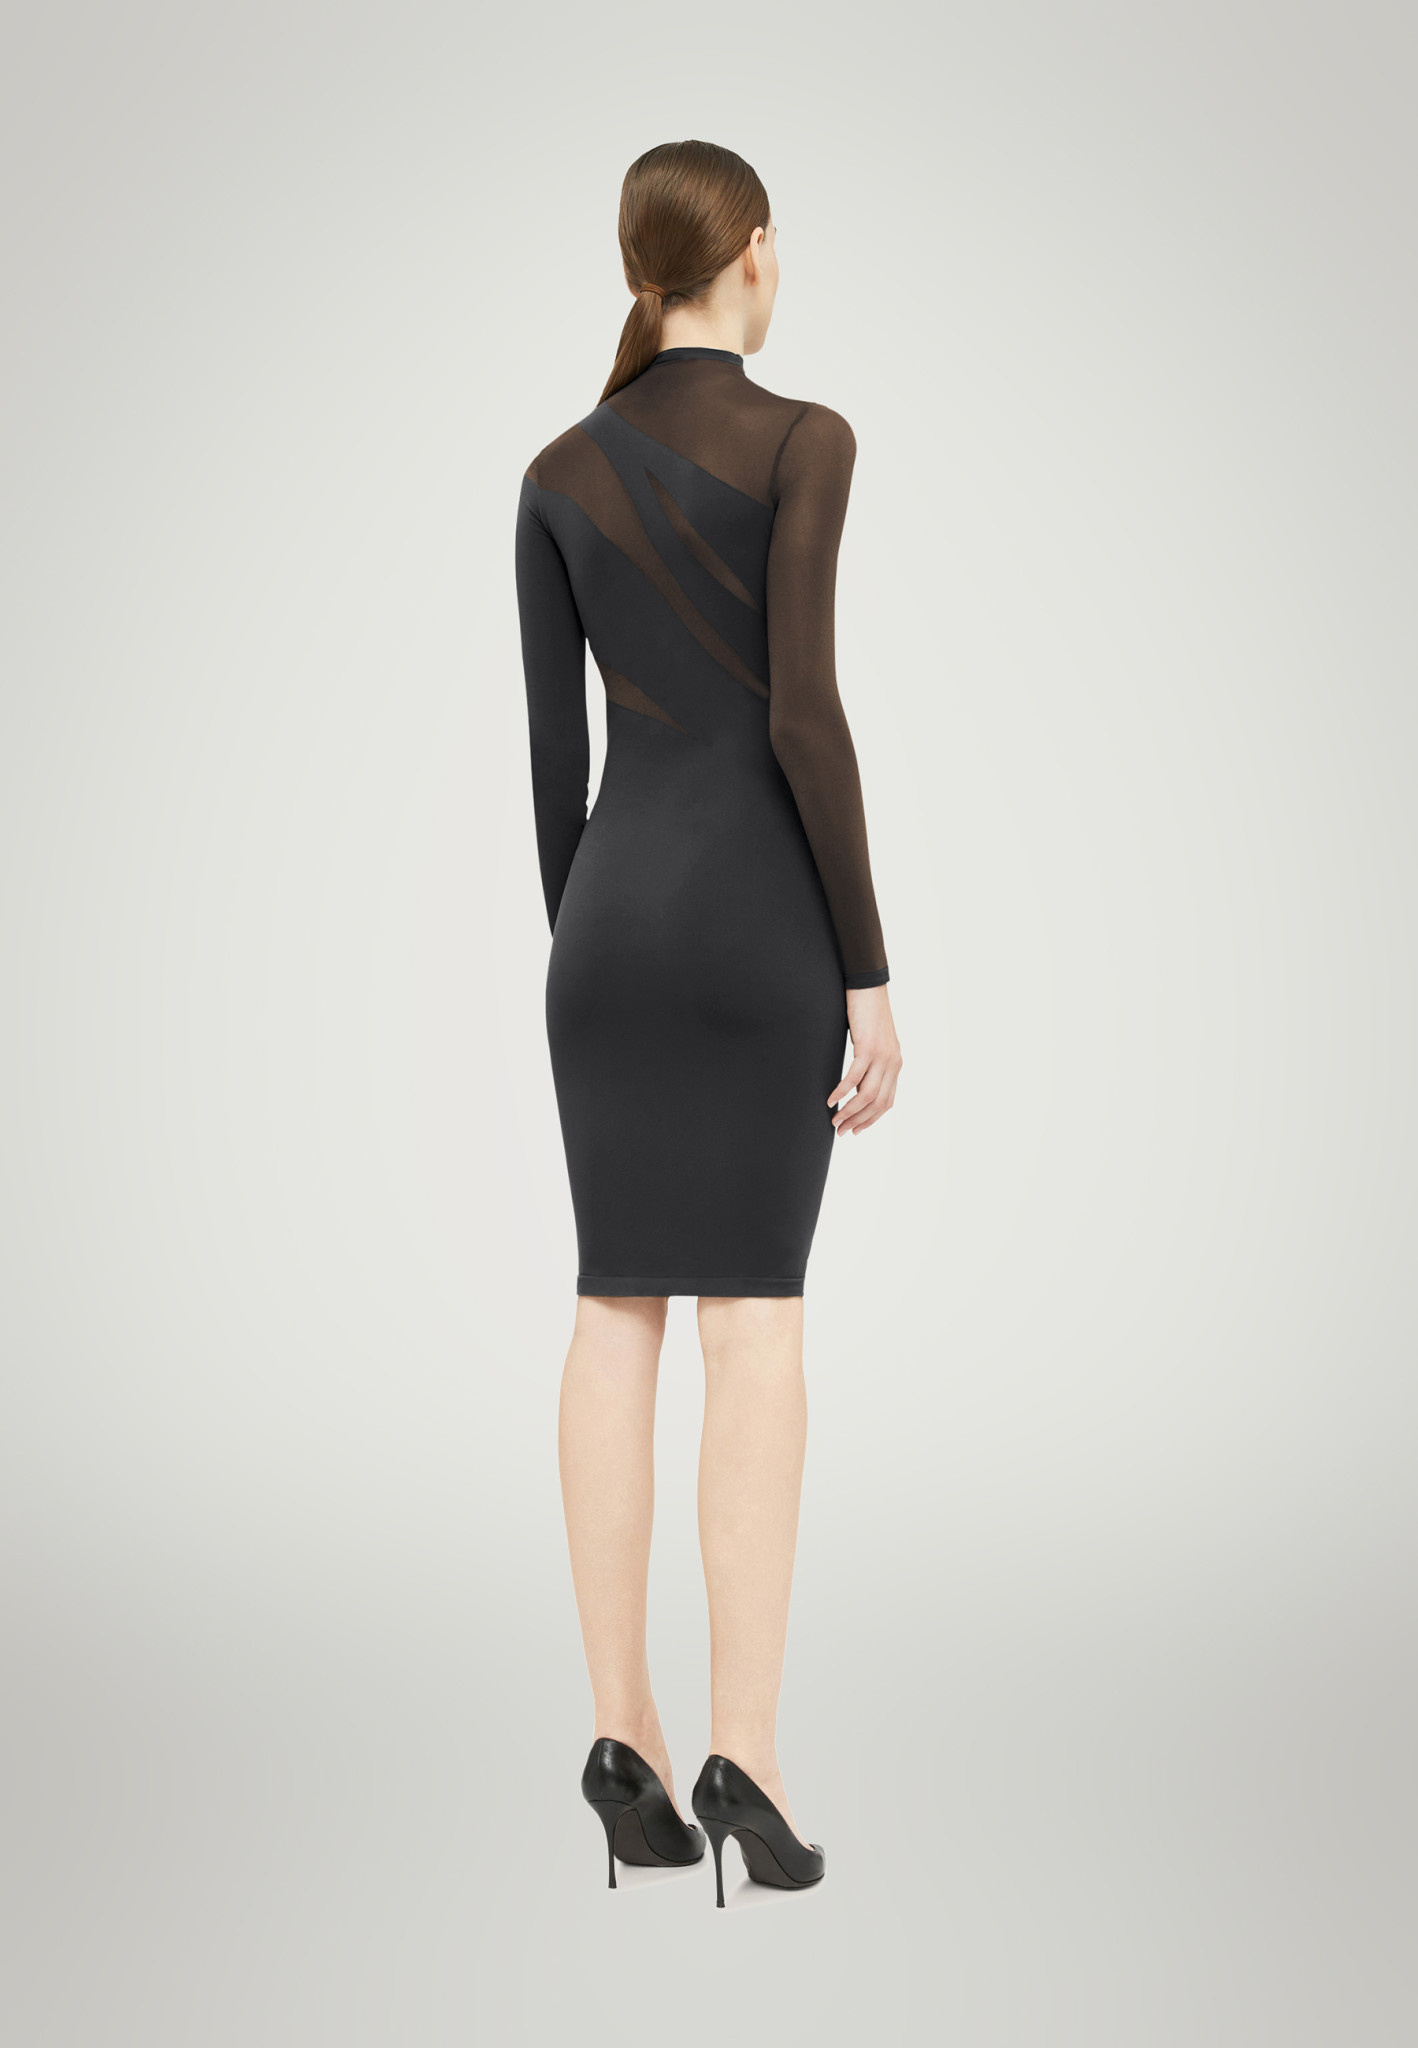 wolford dress 3/4 sleeve light Beige size xs